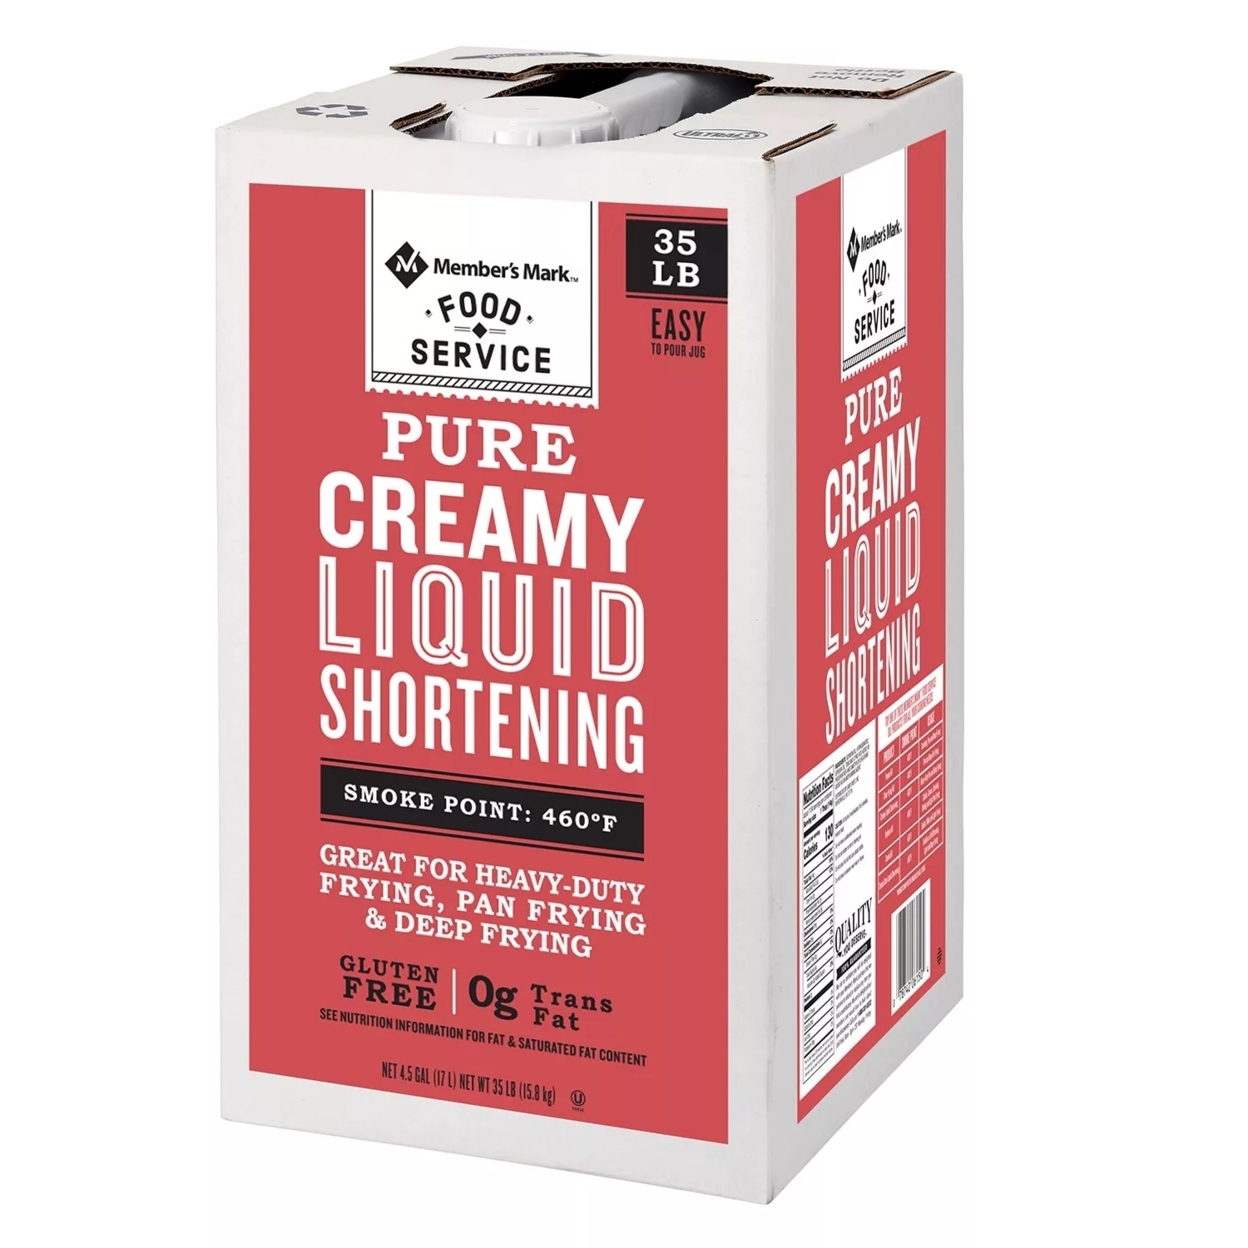 Member's Mark 100 % Pure Creamy Liquid Shortening (35 Pounds)